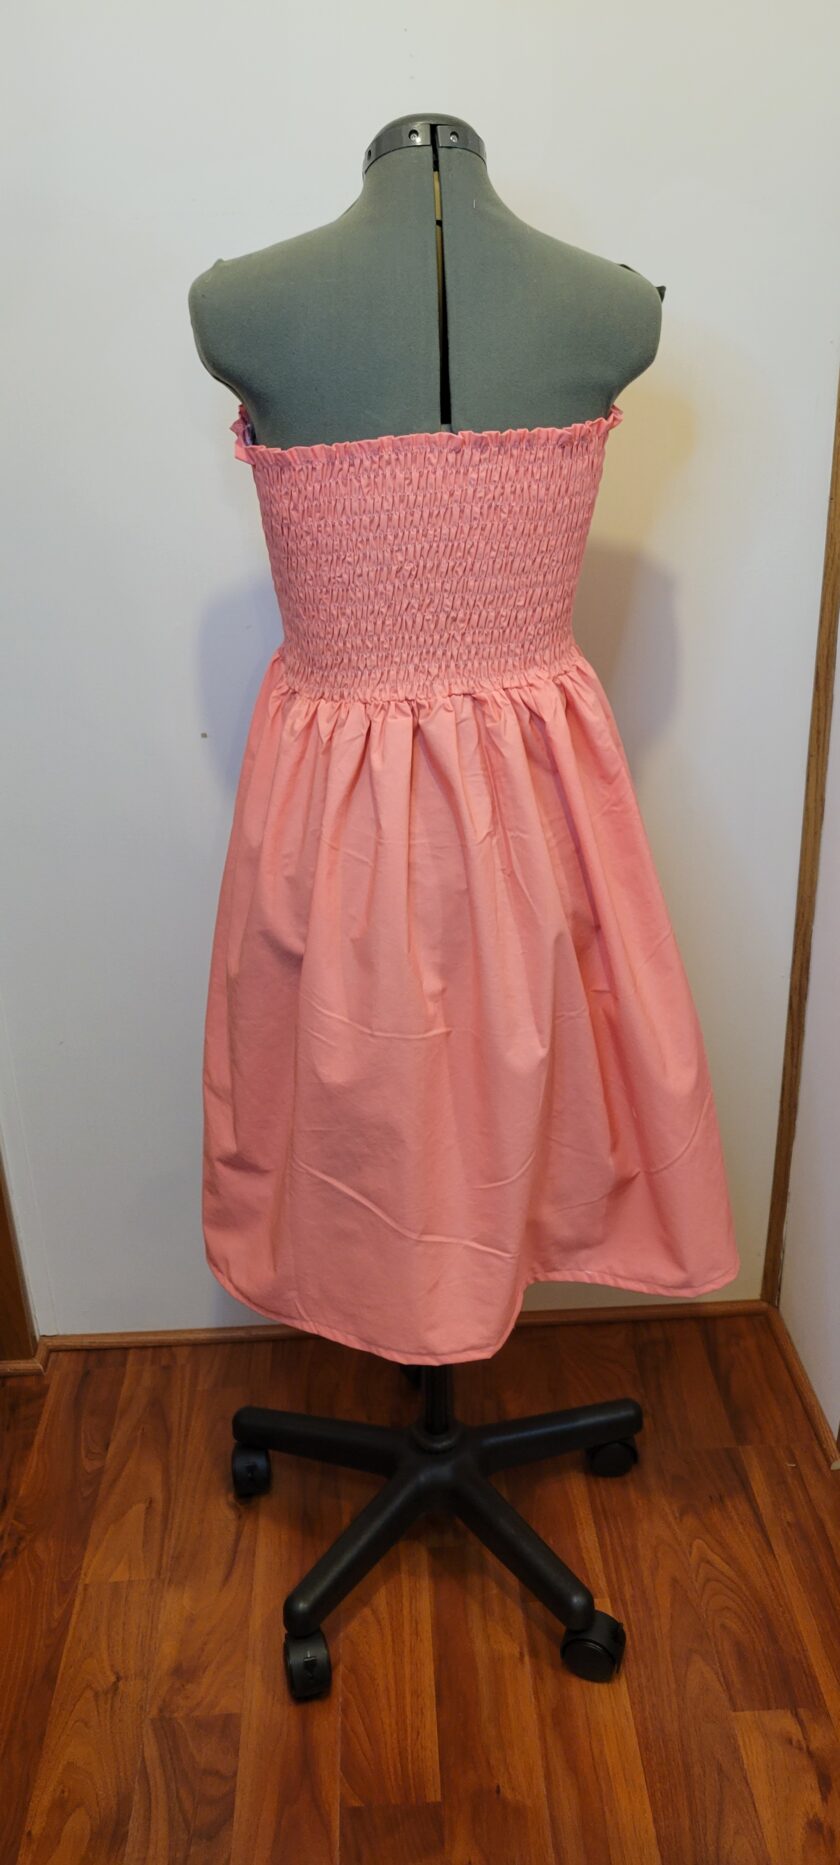 A pink dress on a mannequin.